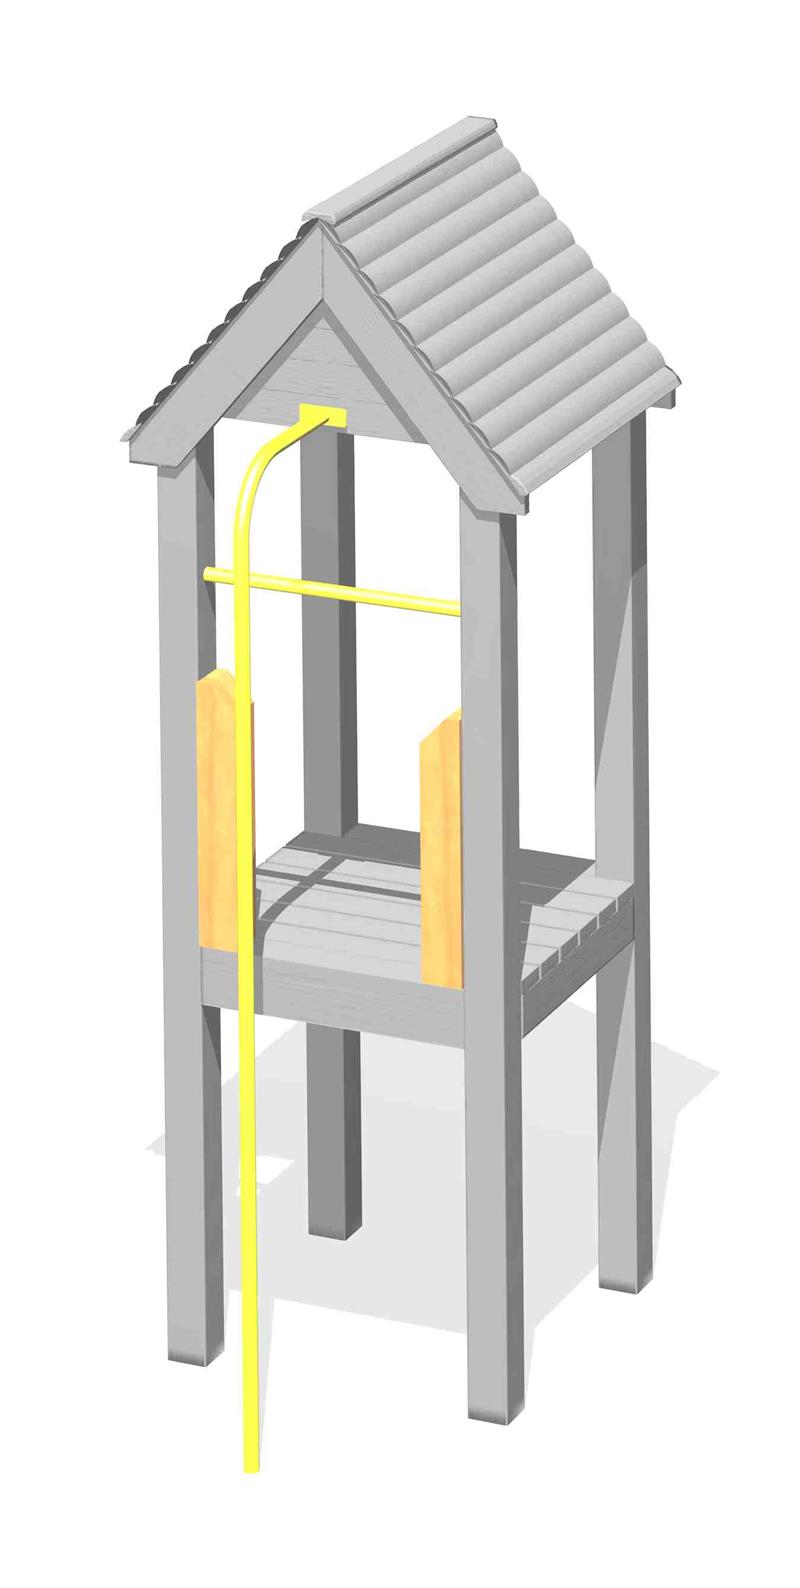 Technical render of a Fireman's Pole